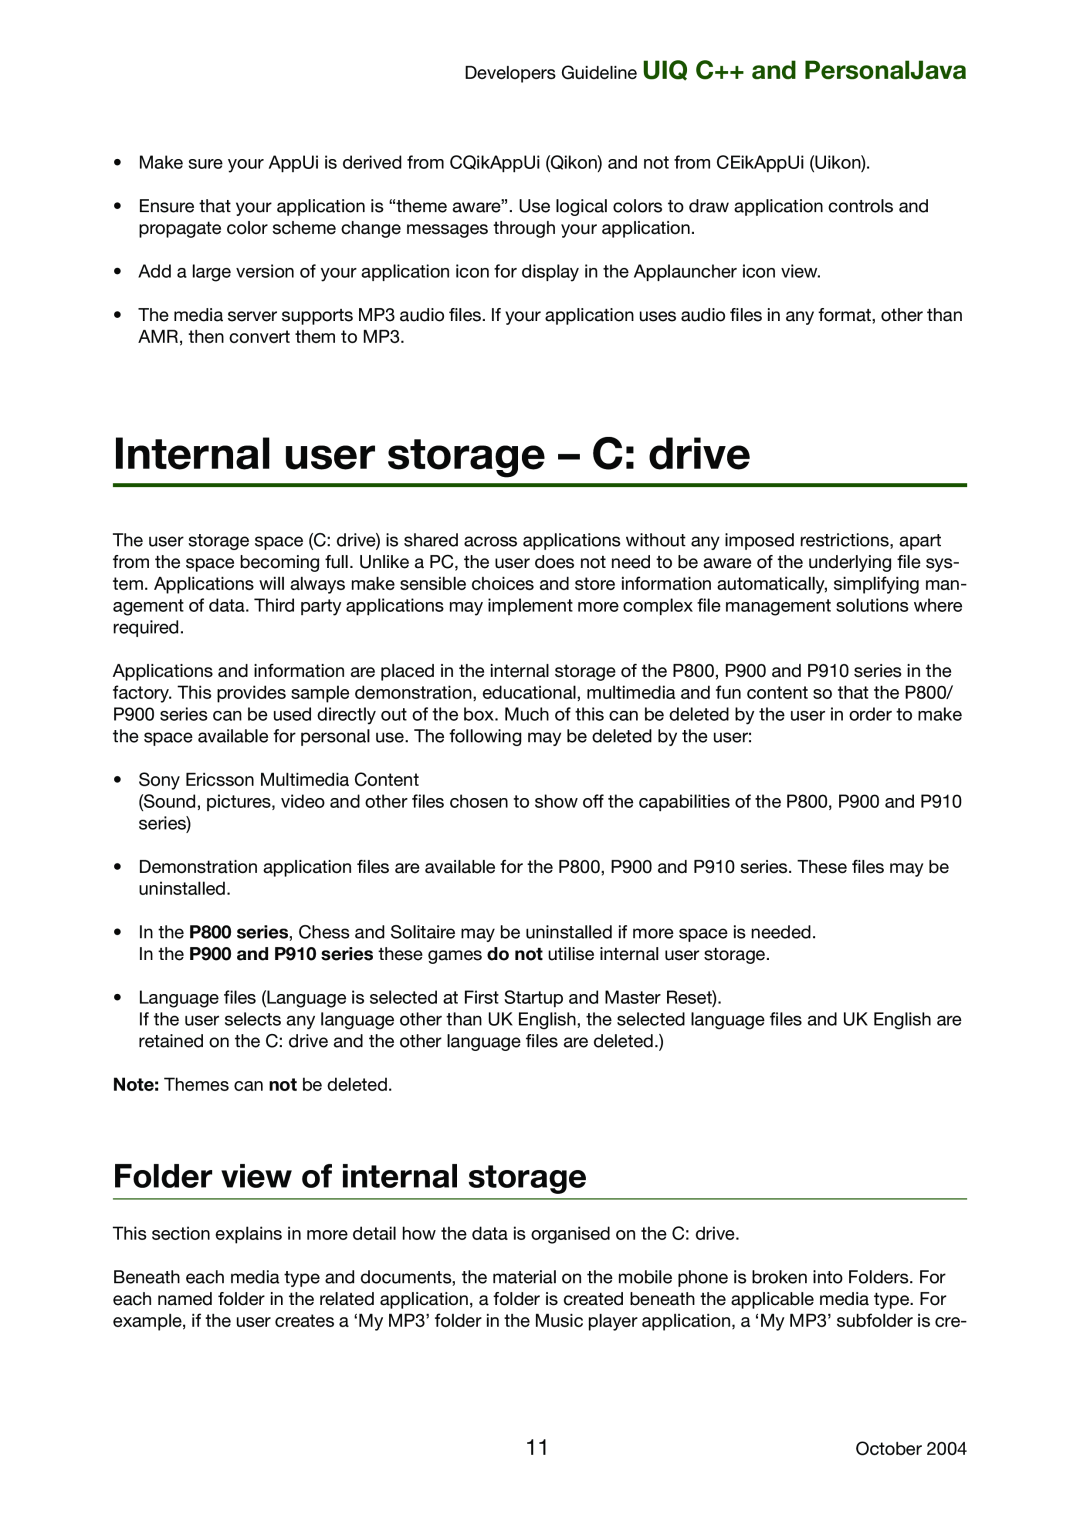 Sony Ericsson P800, P900 manual Internal user storage - C drive, Folder view of internal storage 